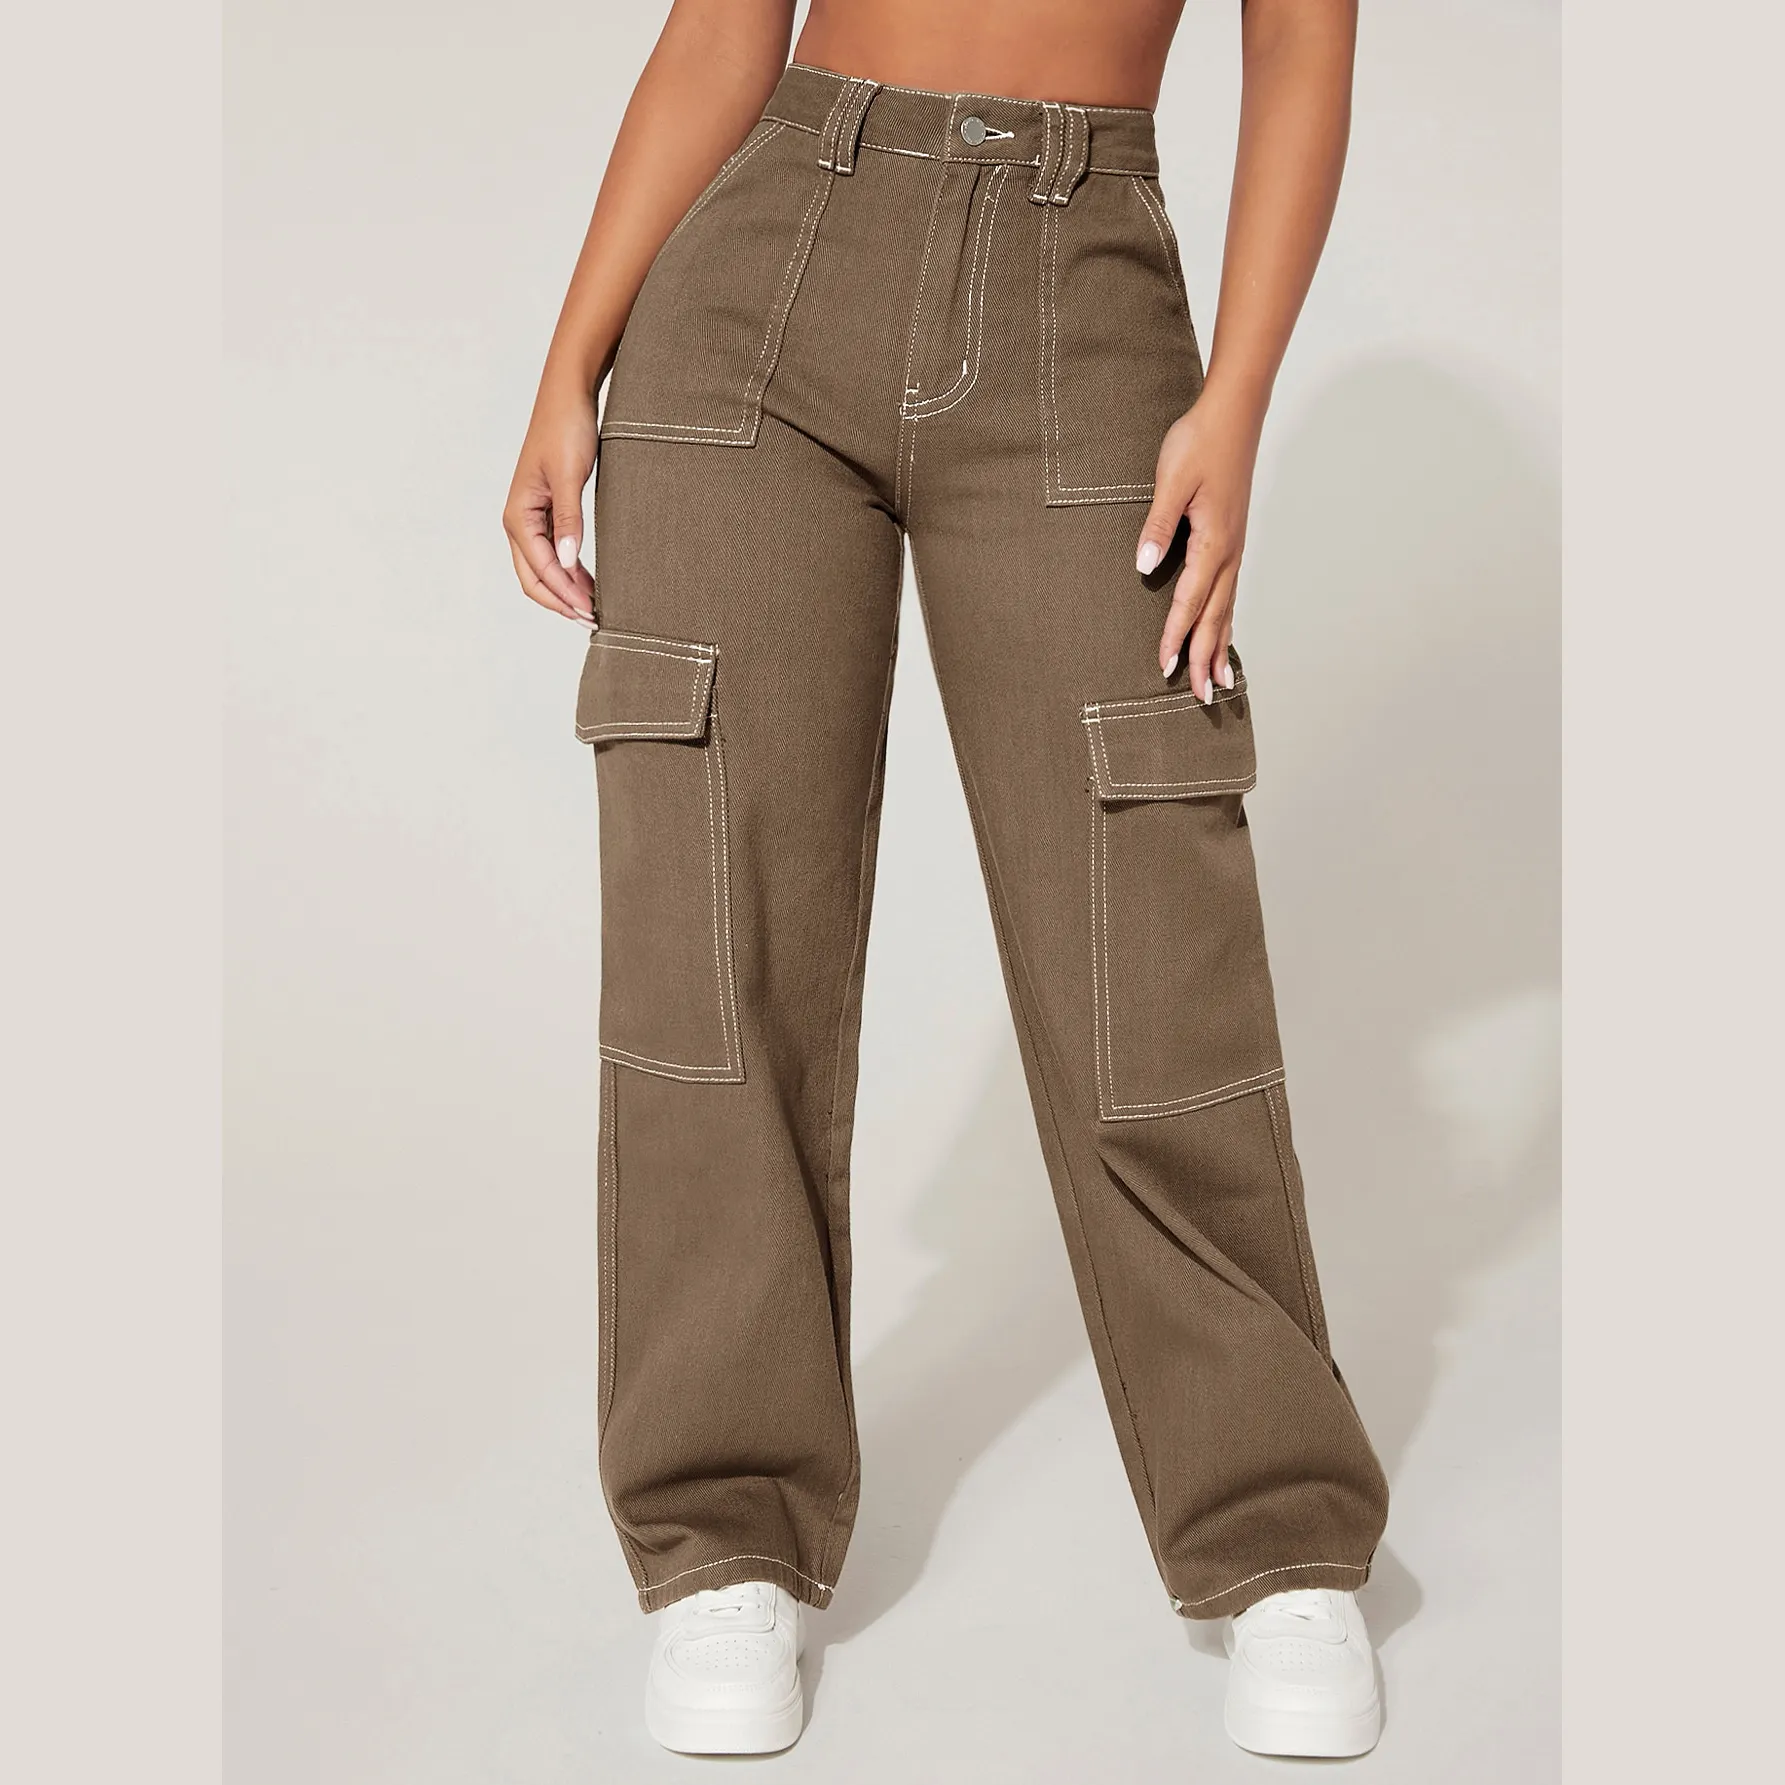 Wide straight Hot Selling Boyfriend Denim Vintage Women Jeans High Quality Jeans Asymmetrical Waist Pants Denim Jeans